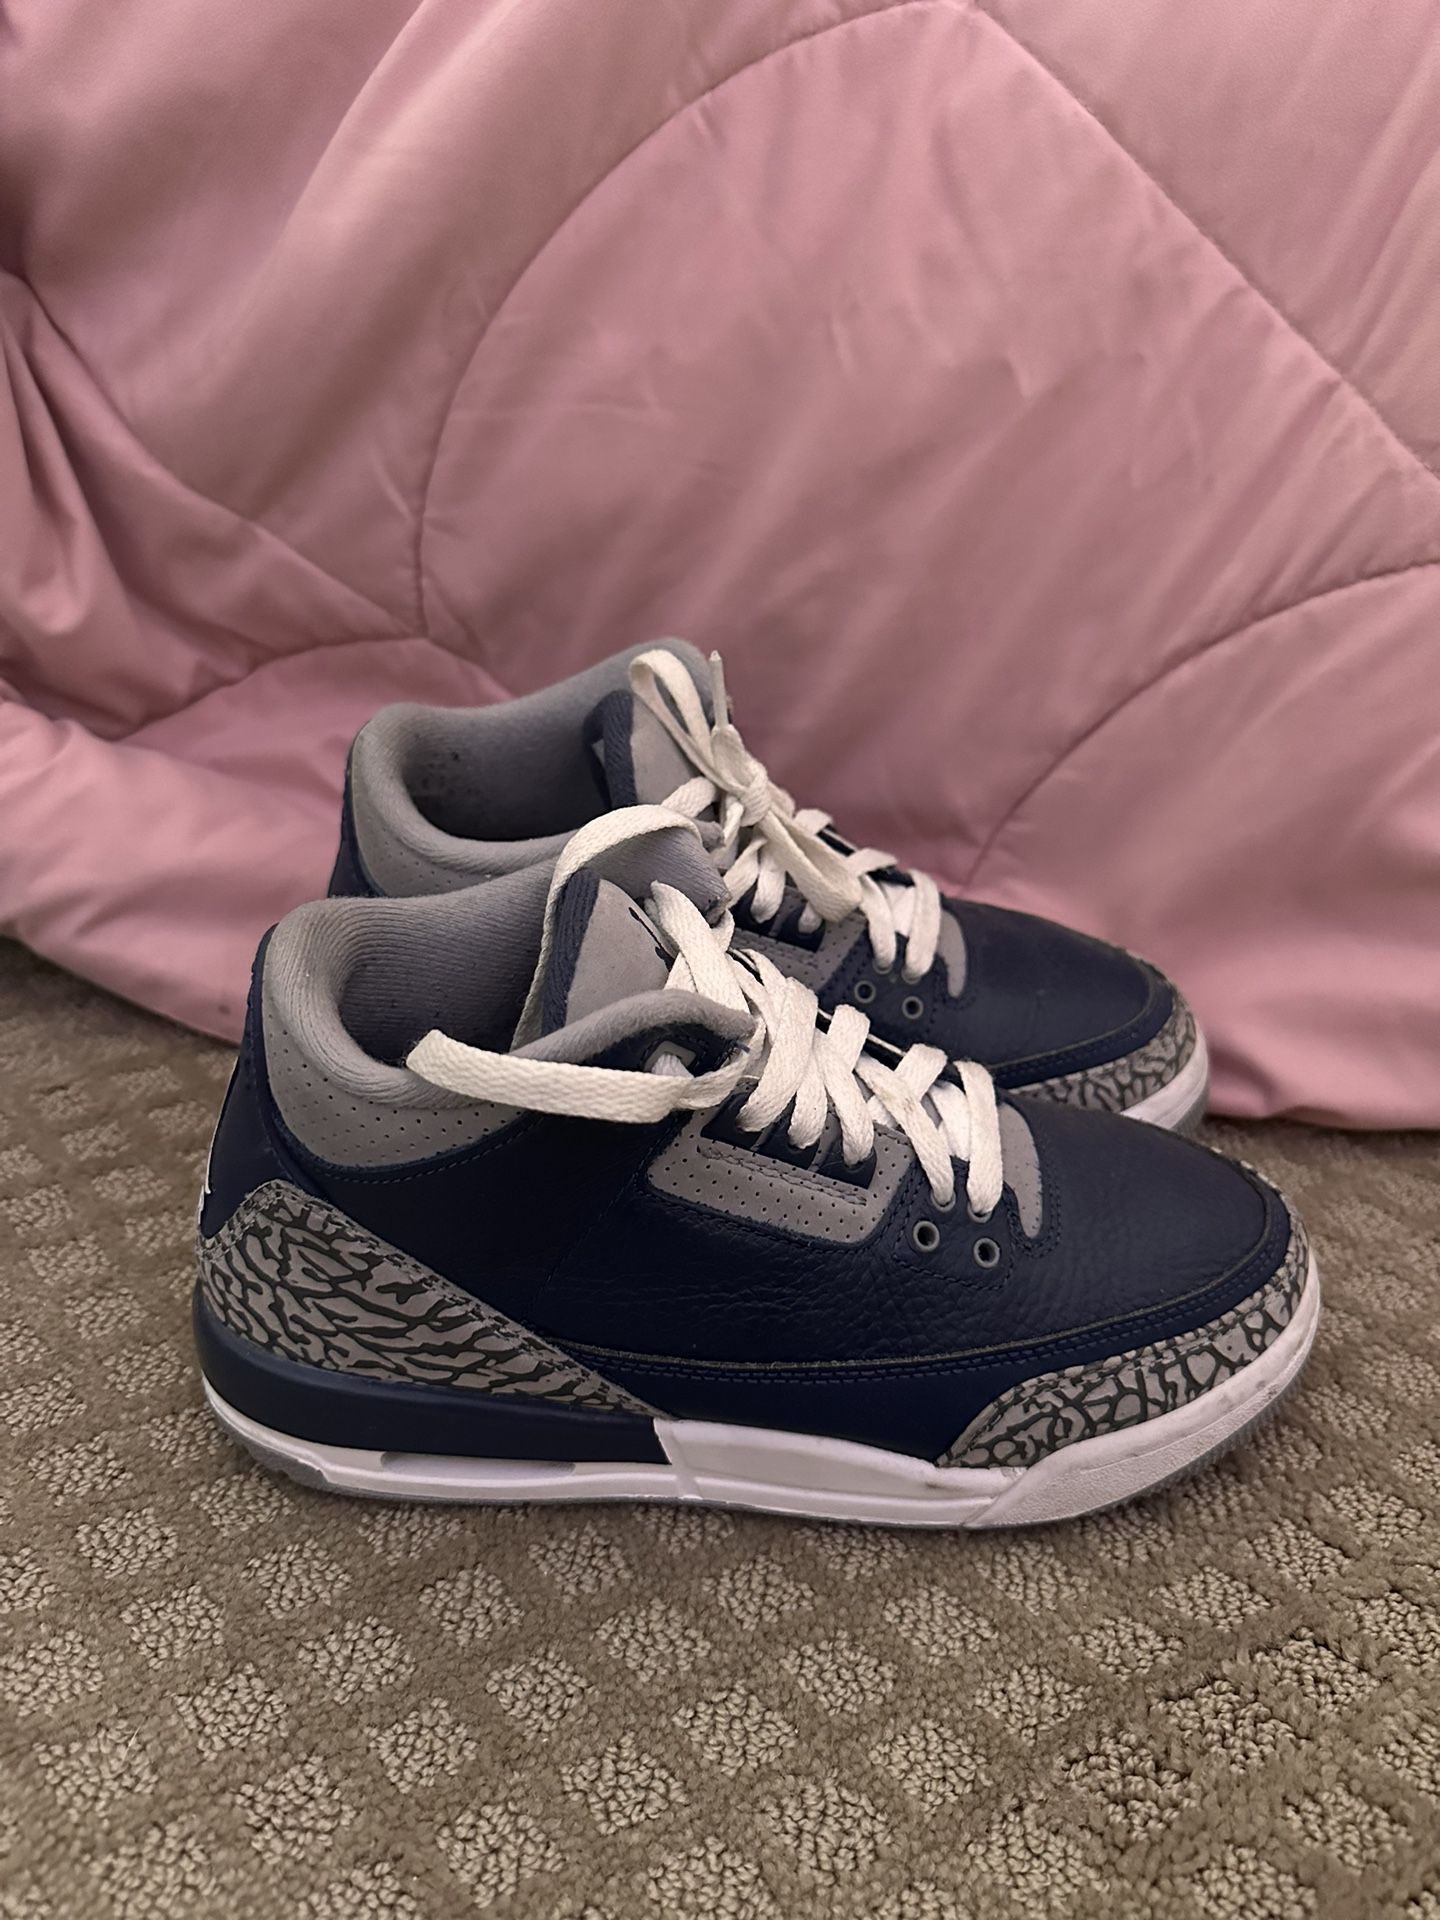 Jordan 3’s Blue n Grey